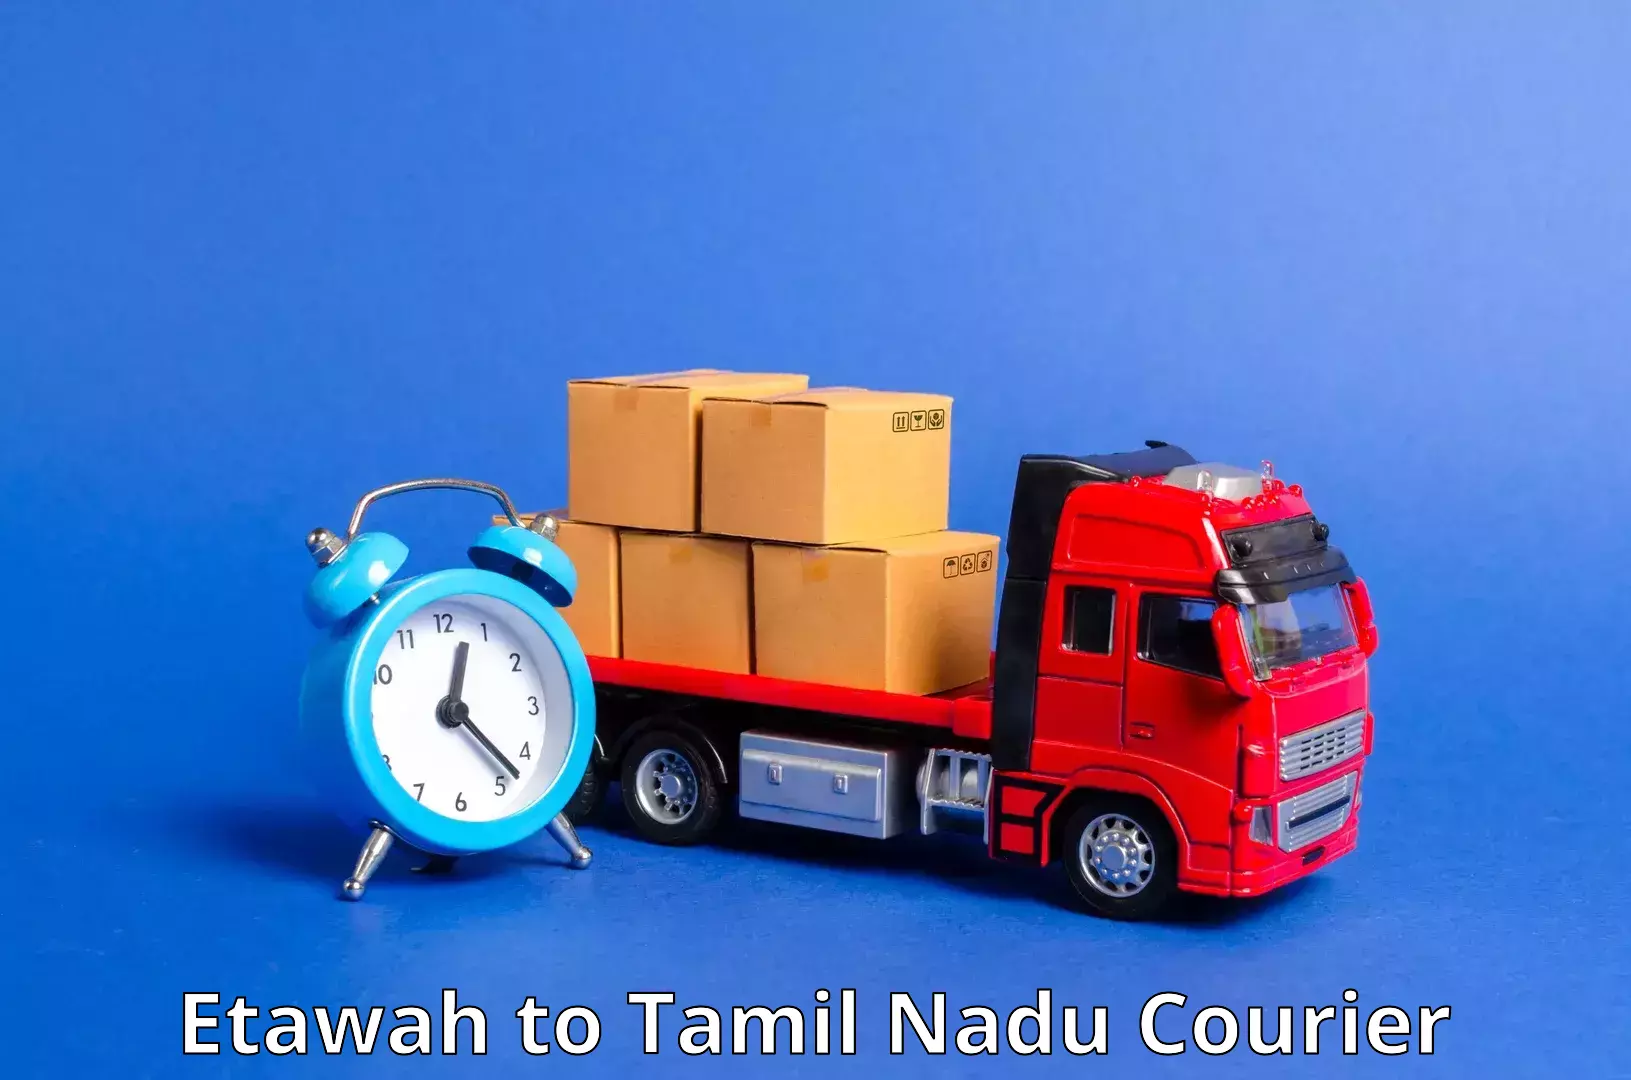 Bulk shipping discounts Etawah to Tiruchirappalli